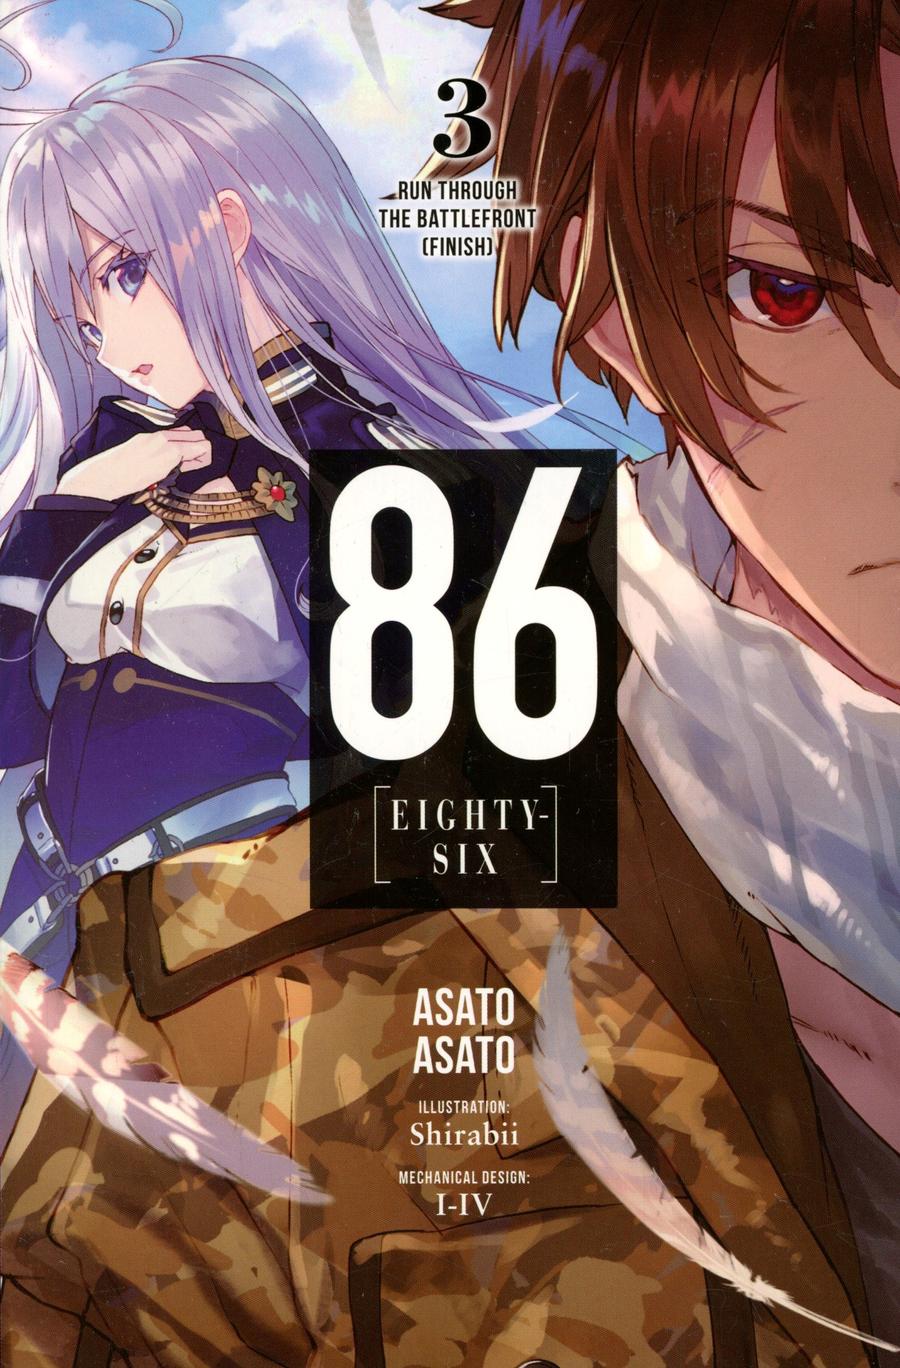 86-EIGHTY-SIX Light Novel Vol 3